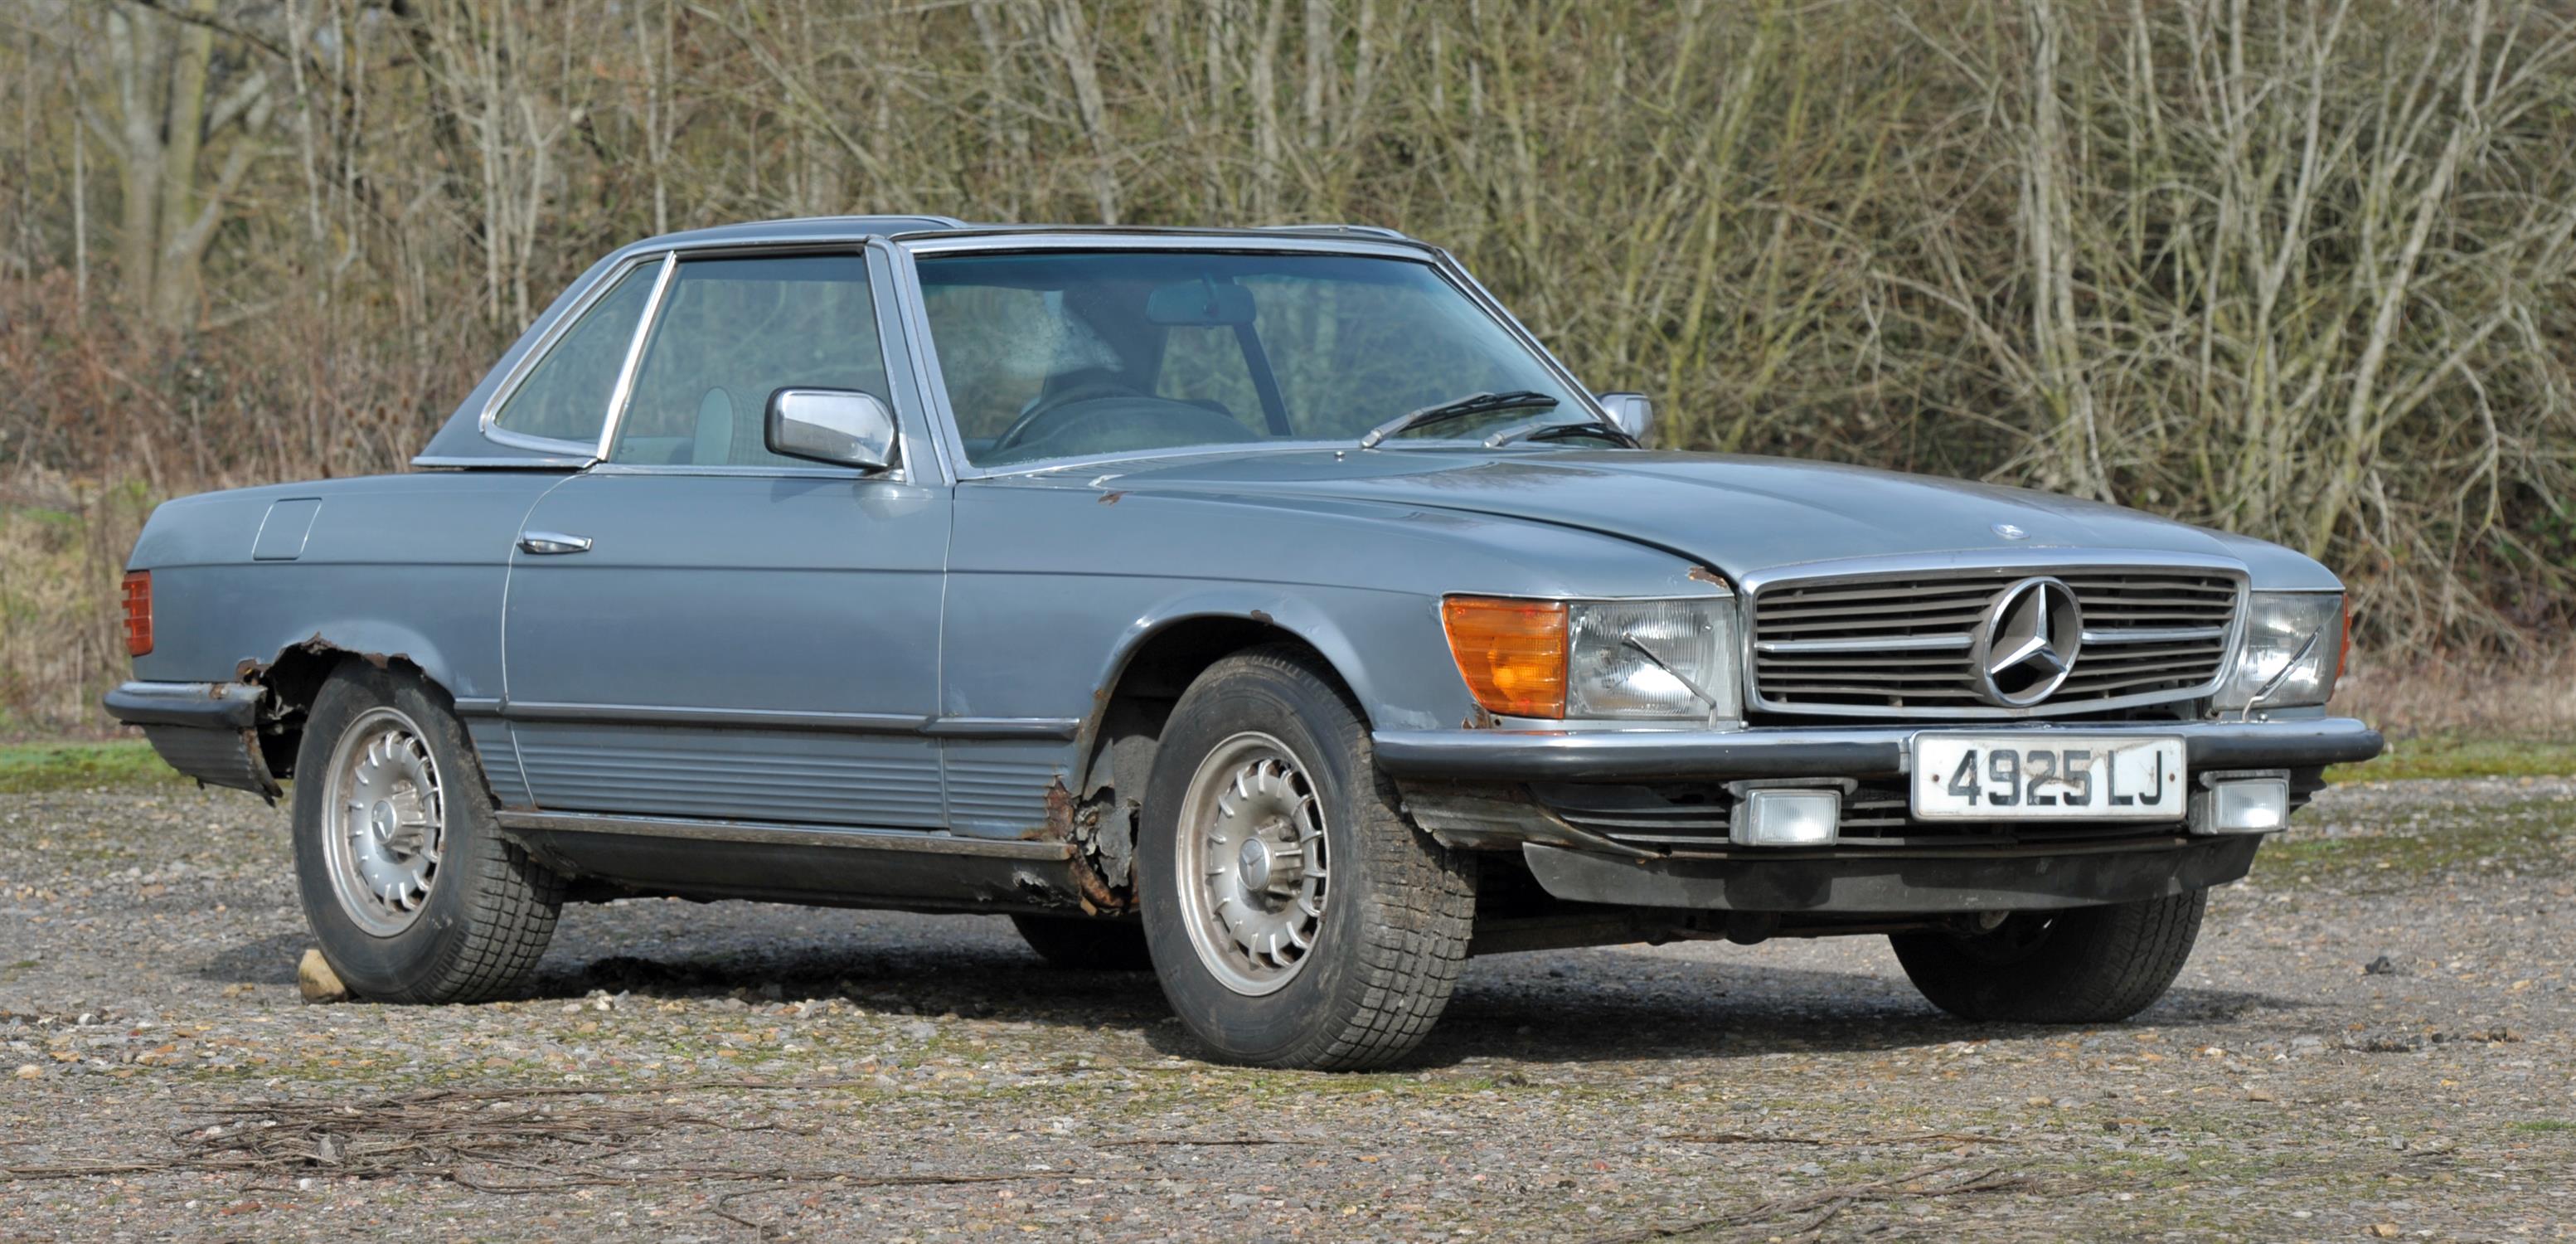 1981 Mercedes 380 SL R107 Automatic Petrol Convertible. Registration number: 4925 LJ.